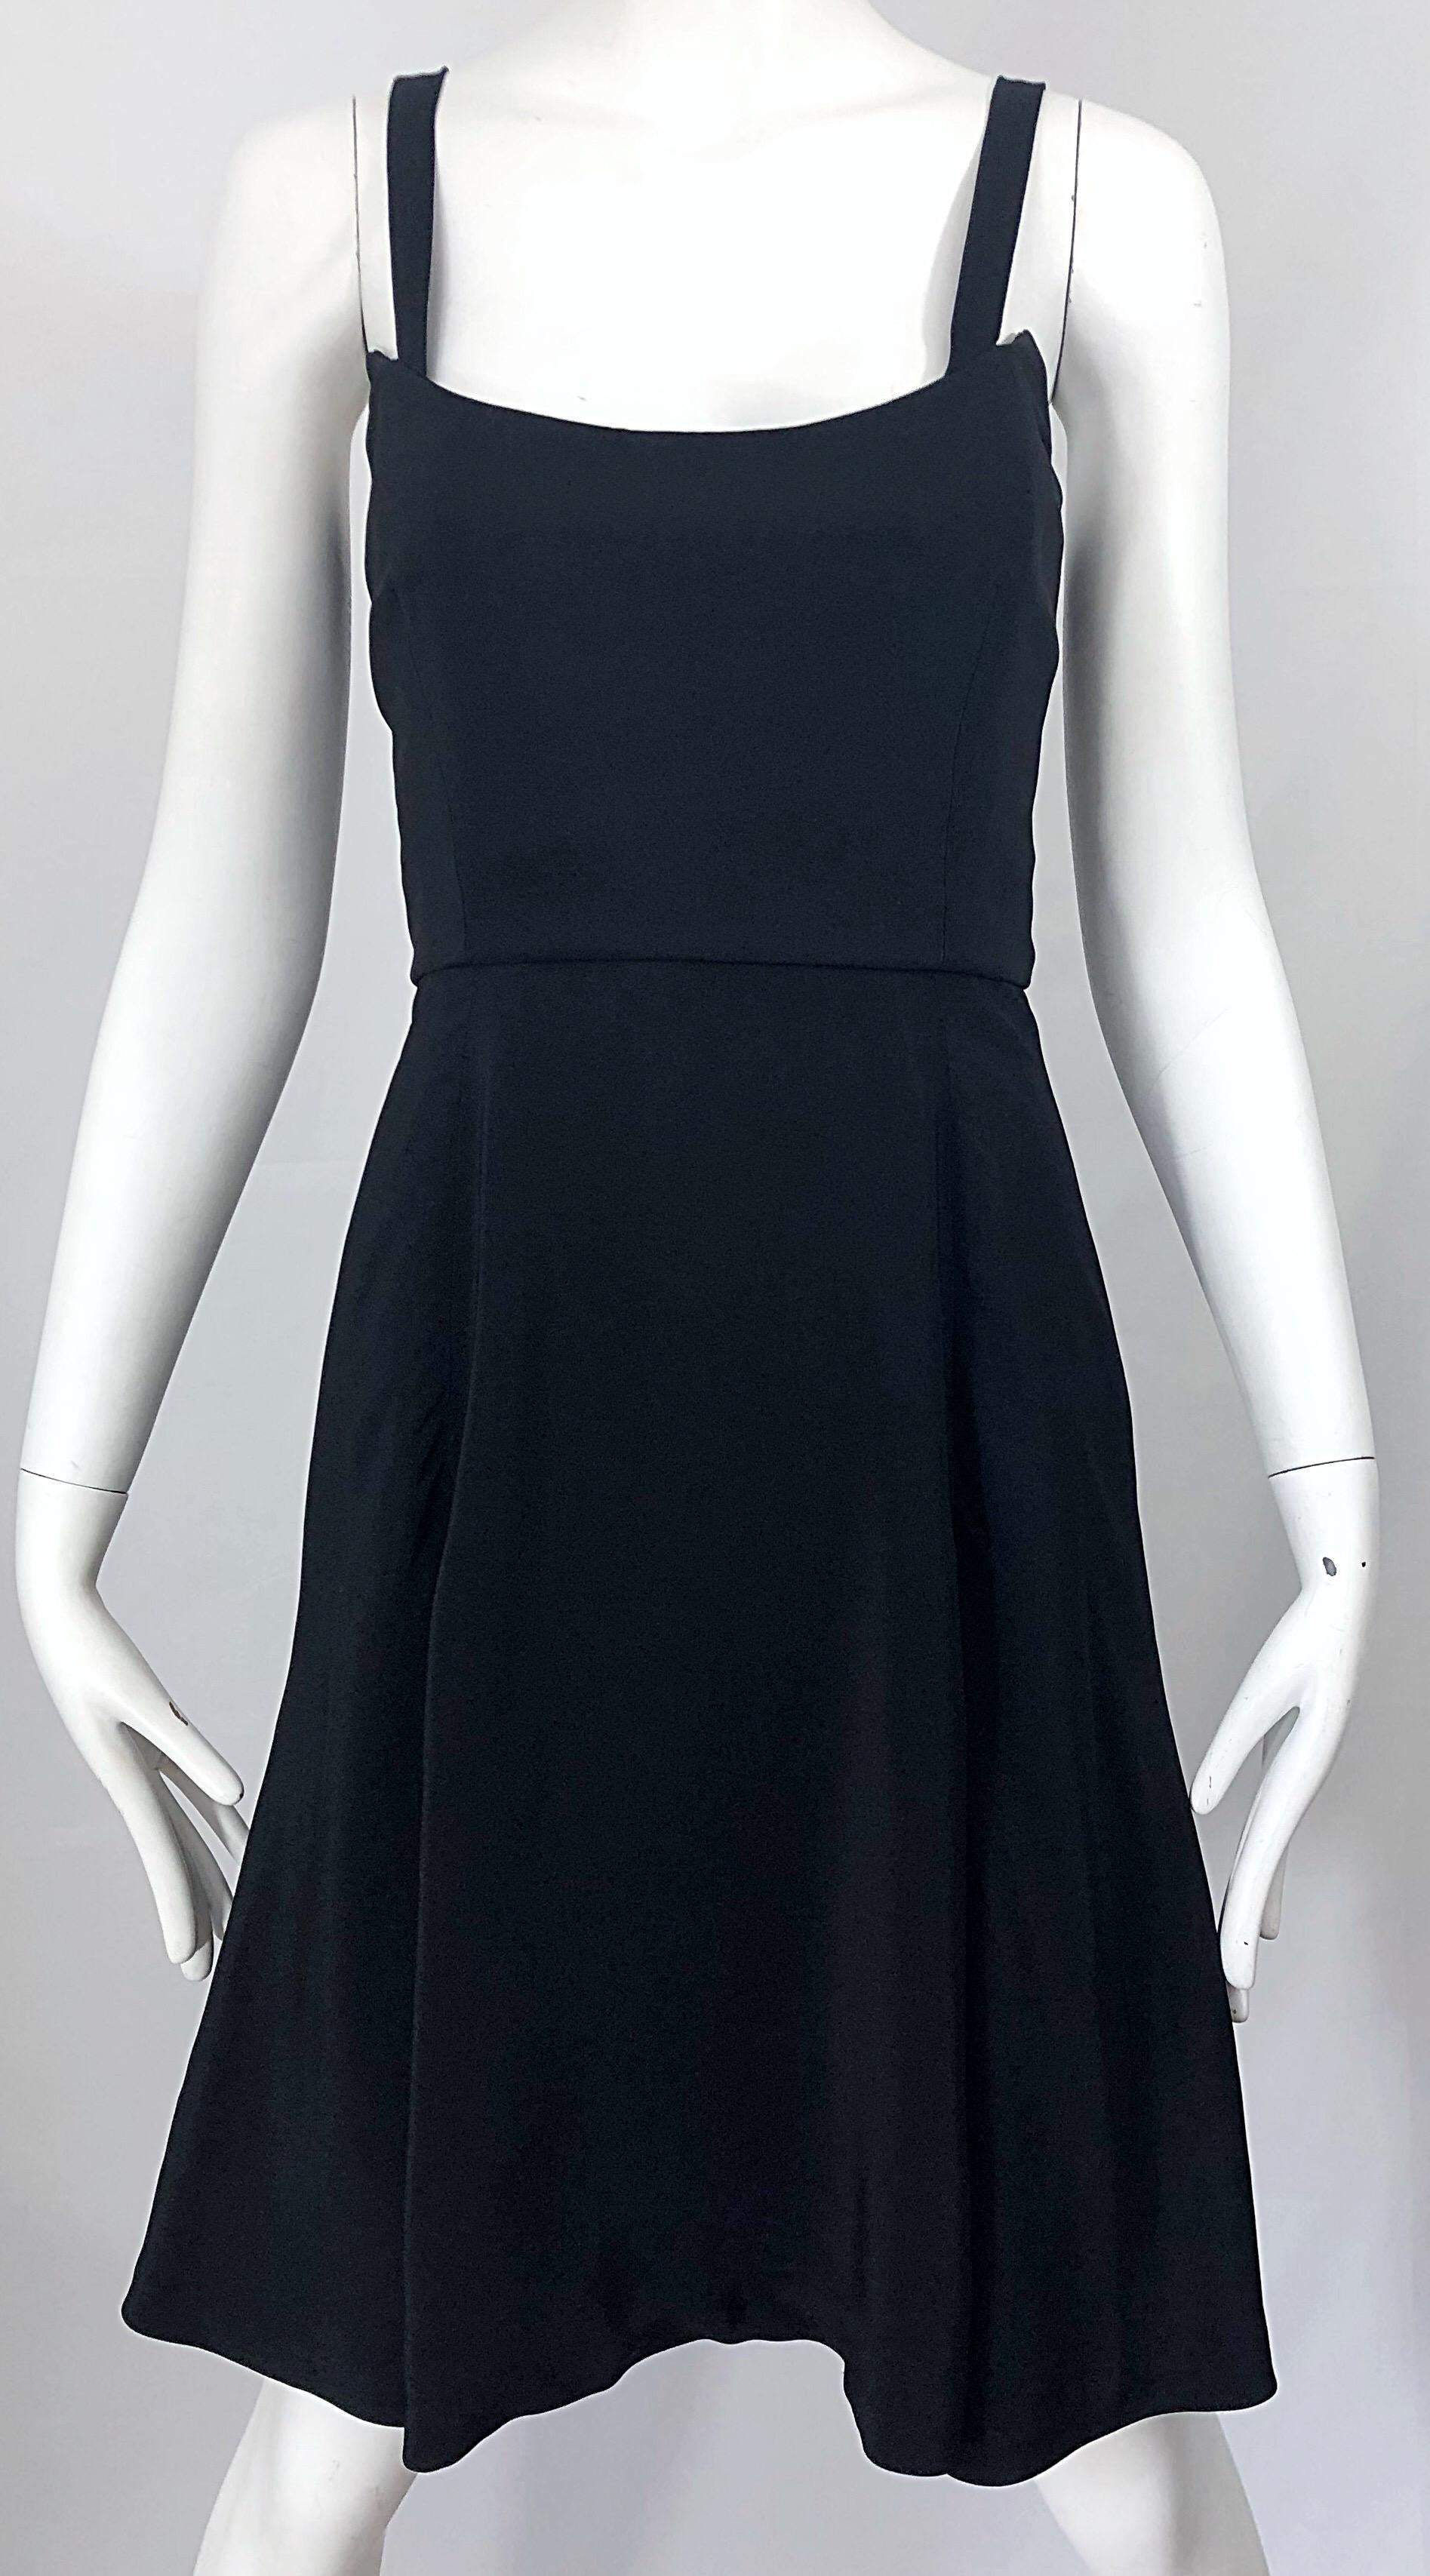 1990s Christian Lacroix Avant Garde Size 36 2 /4 Vintage Black 90s Skater Dress For Sale 2